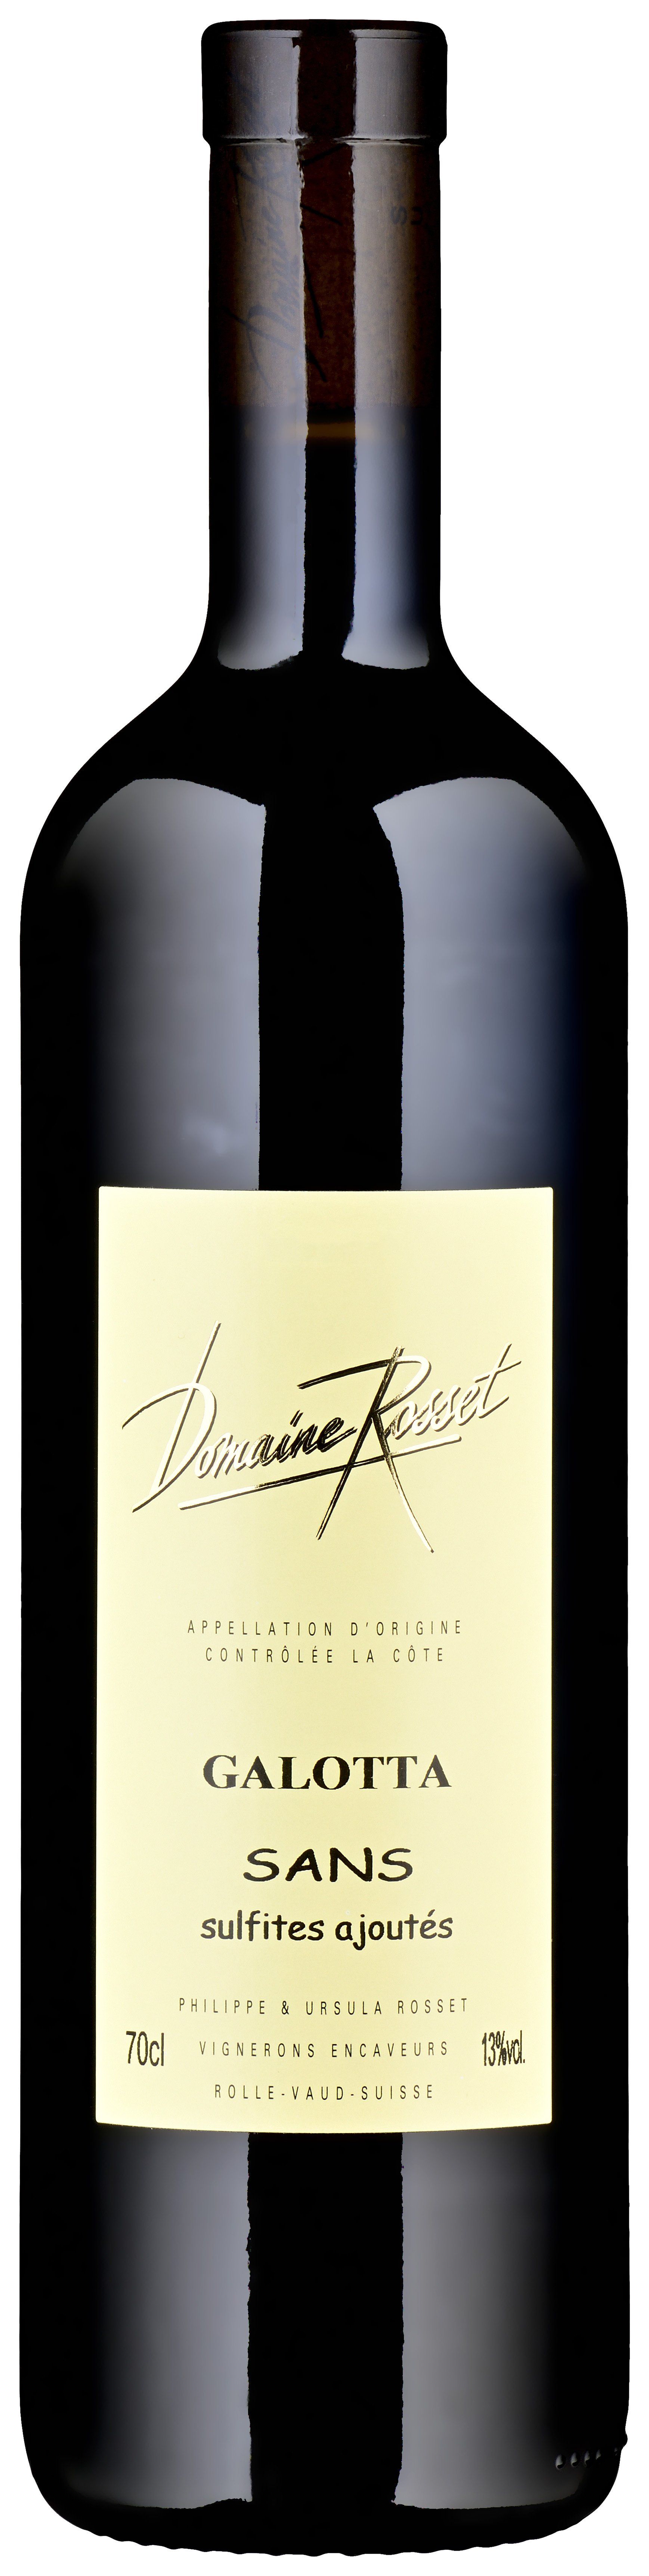 Patriote Pinot Noir vin Domaine Rosset